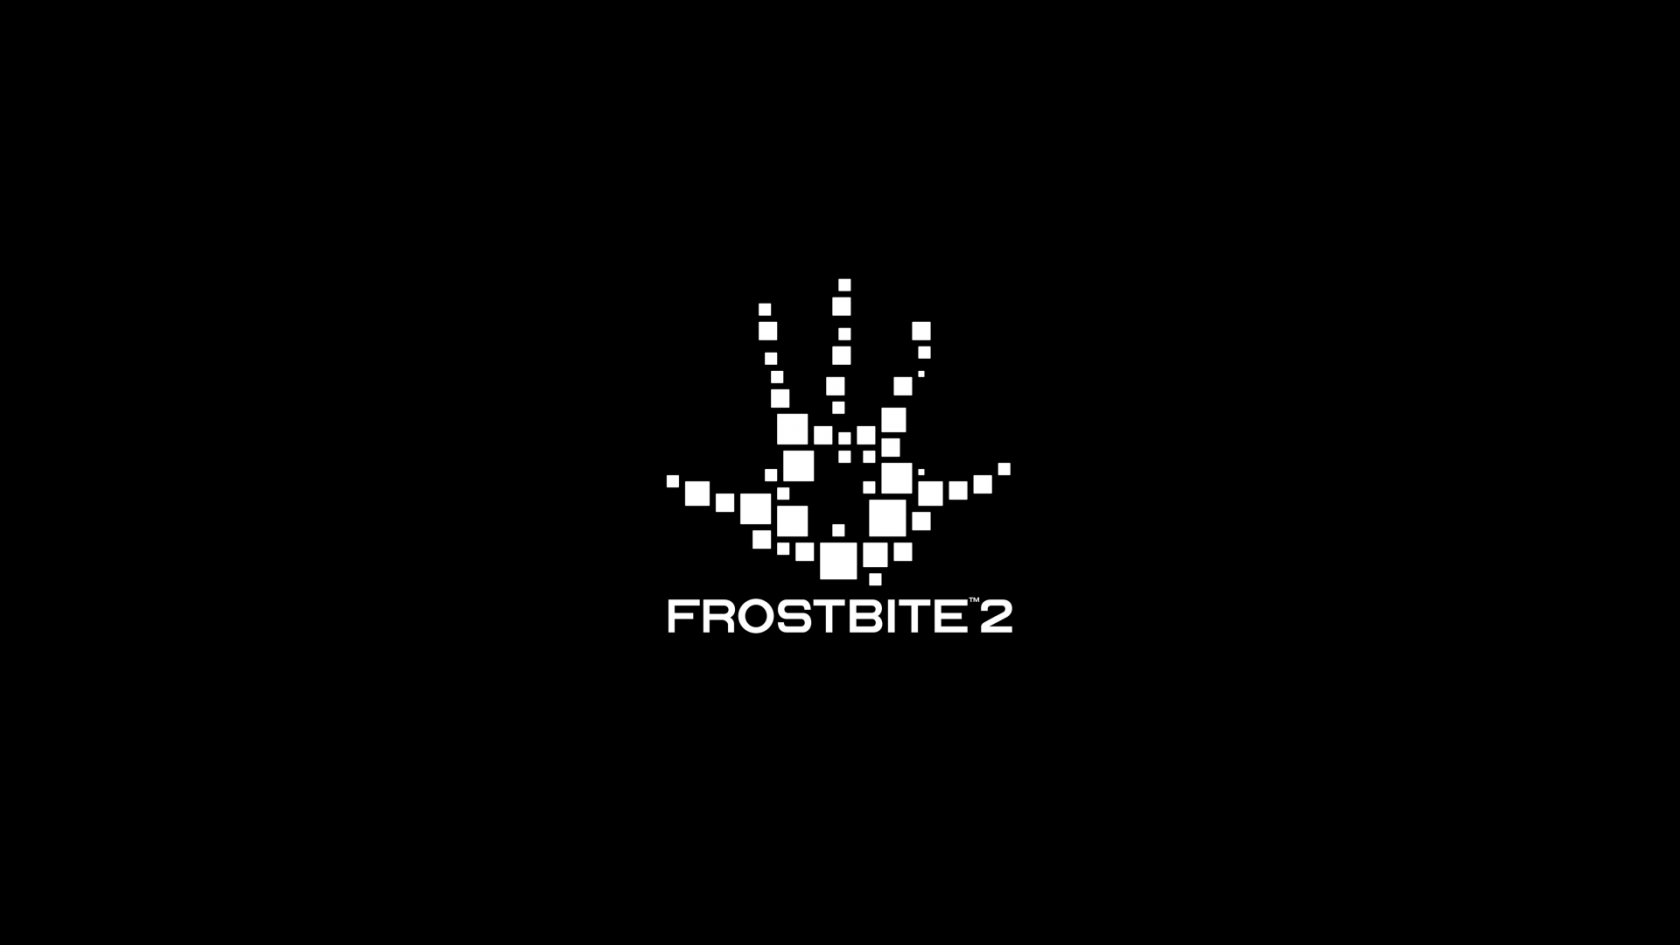 Frostbite 2 for 1680 x 945 HDTV resolution